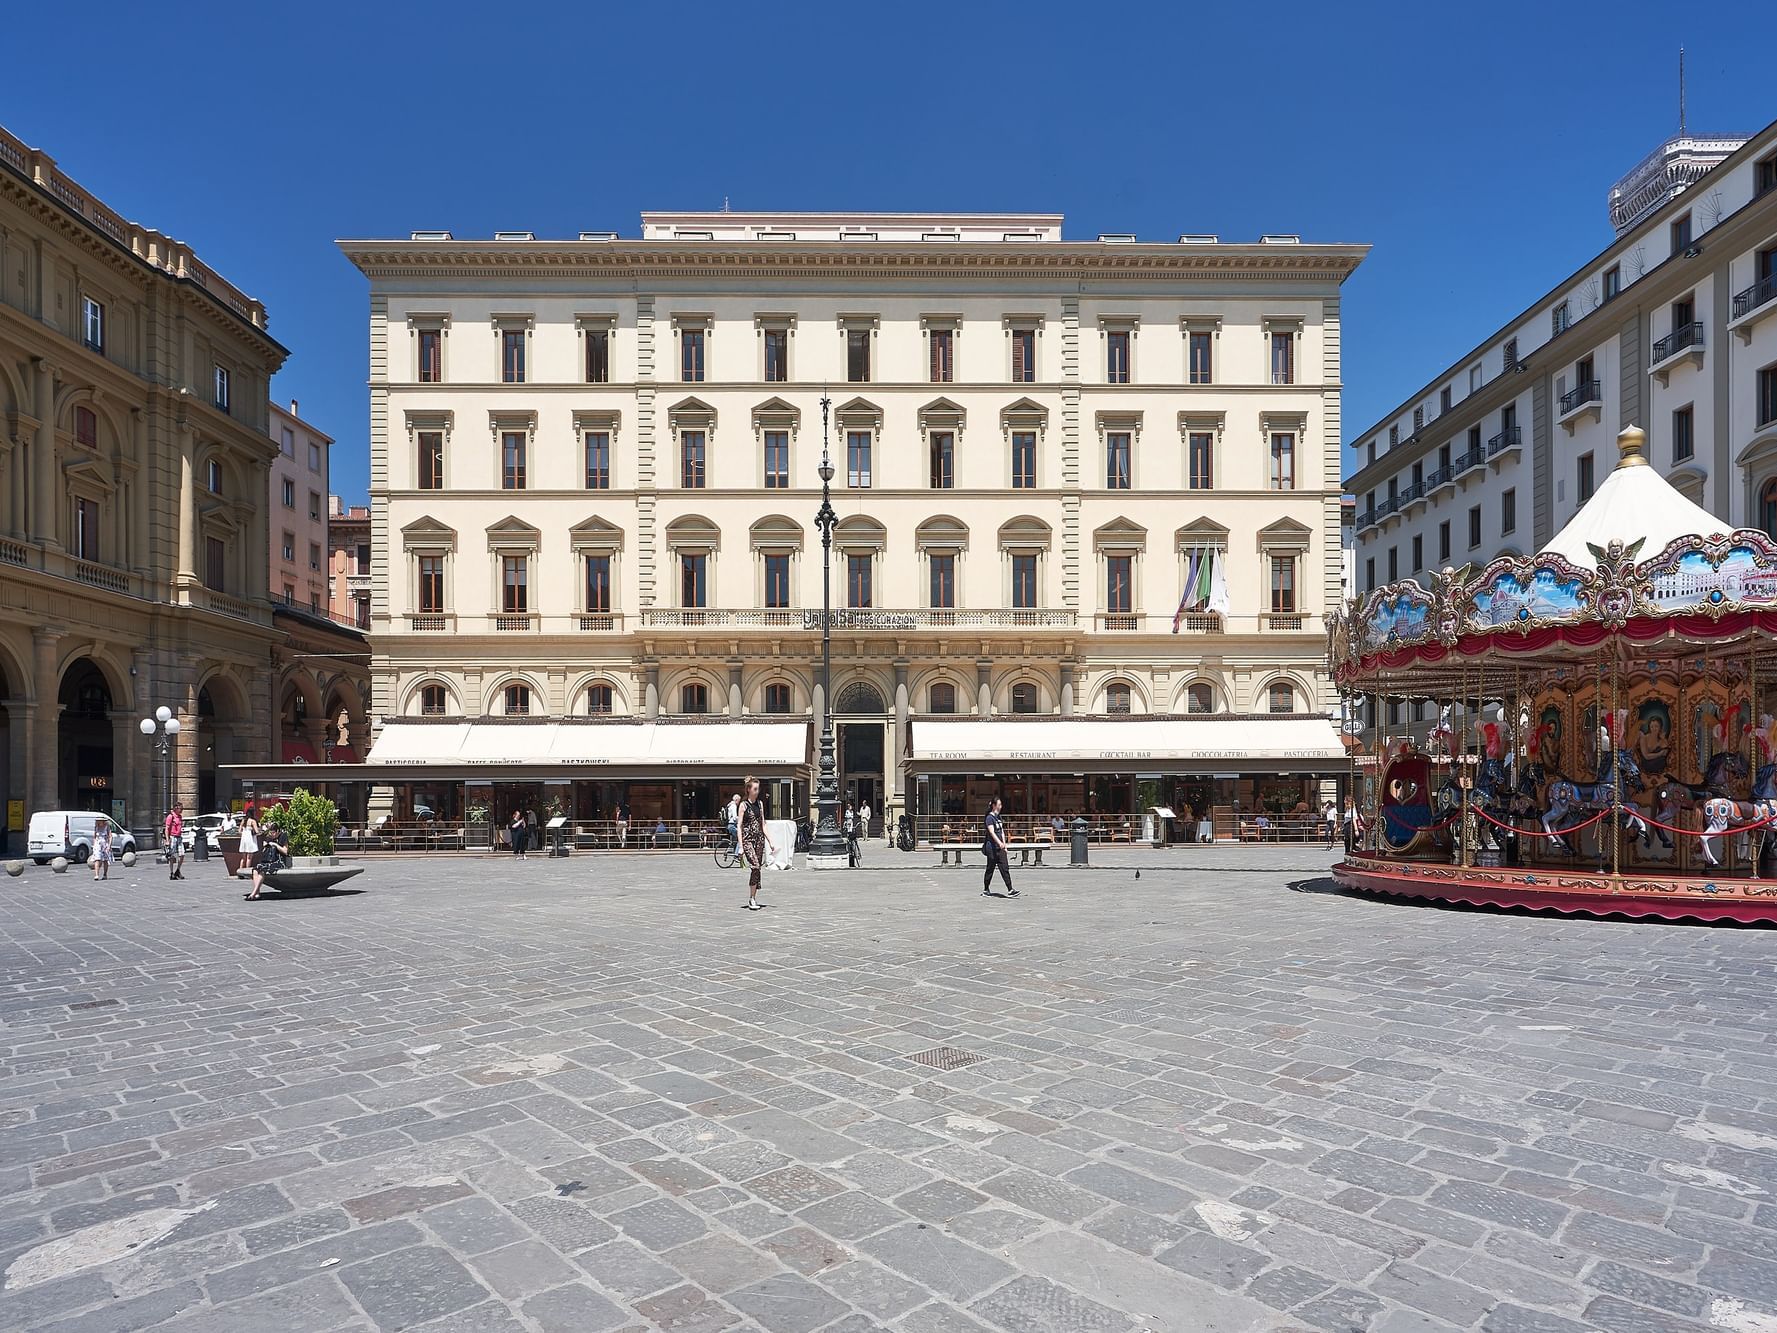 Repubblica Firenze Luxury Apartments UNA Esperienze